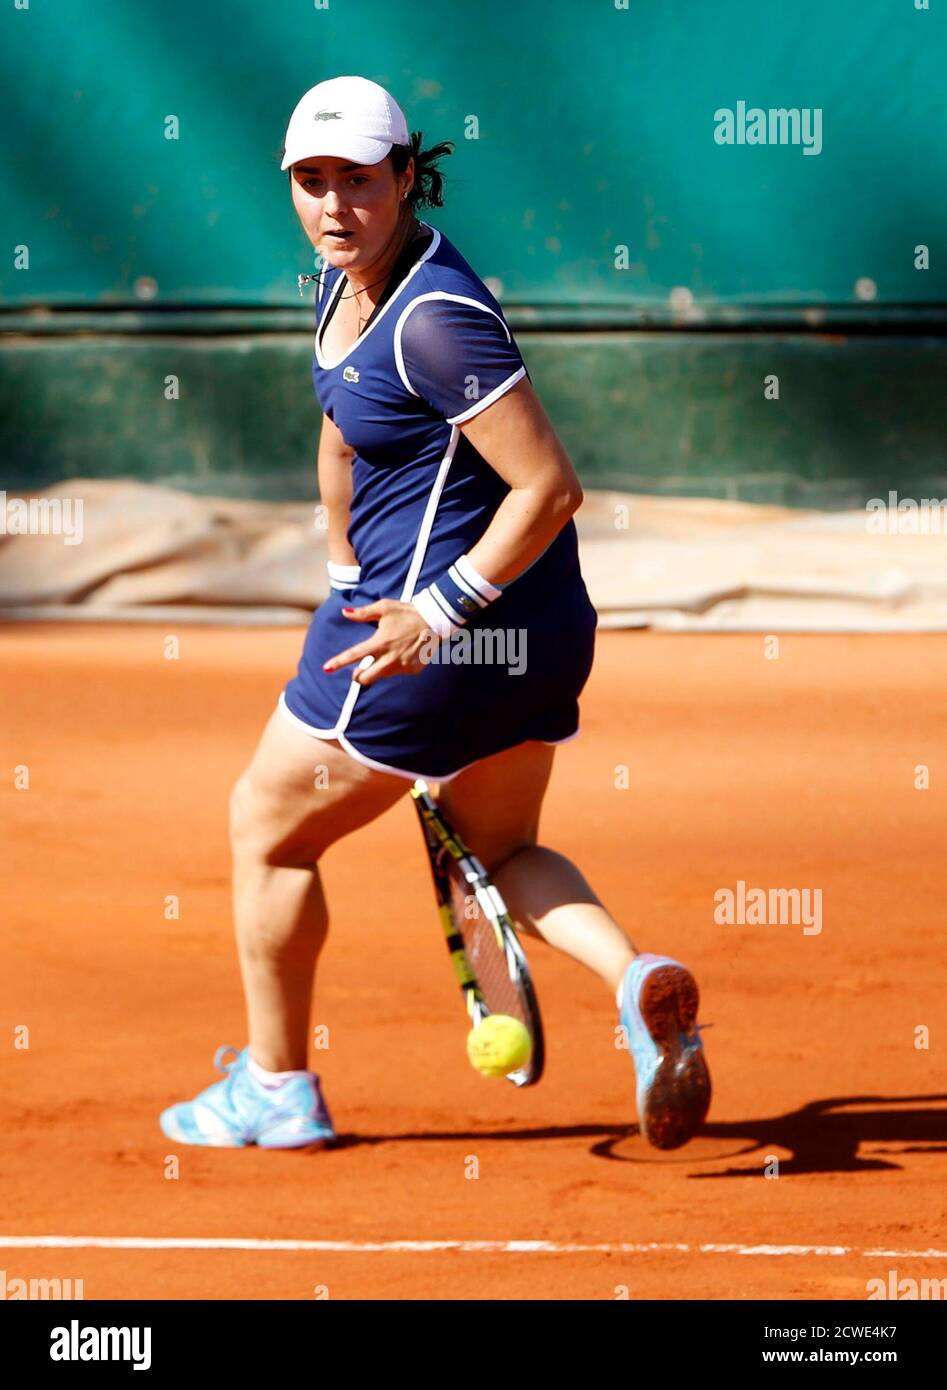 Ons Jabeur of Tunisia hits a return between her legs to von Deichmann of Liechtenstein during their women's singles semi-final match at the Nana Trophy international tennis tournament in Tunis May